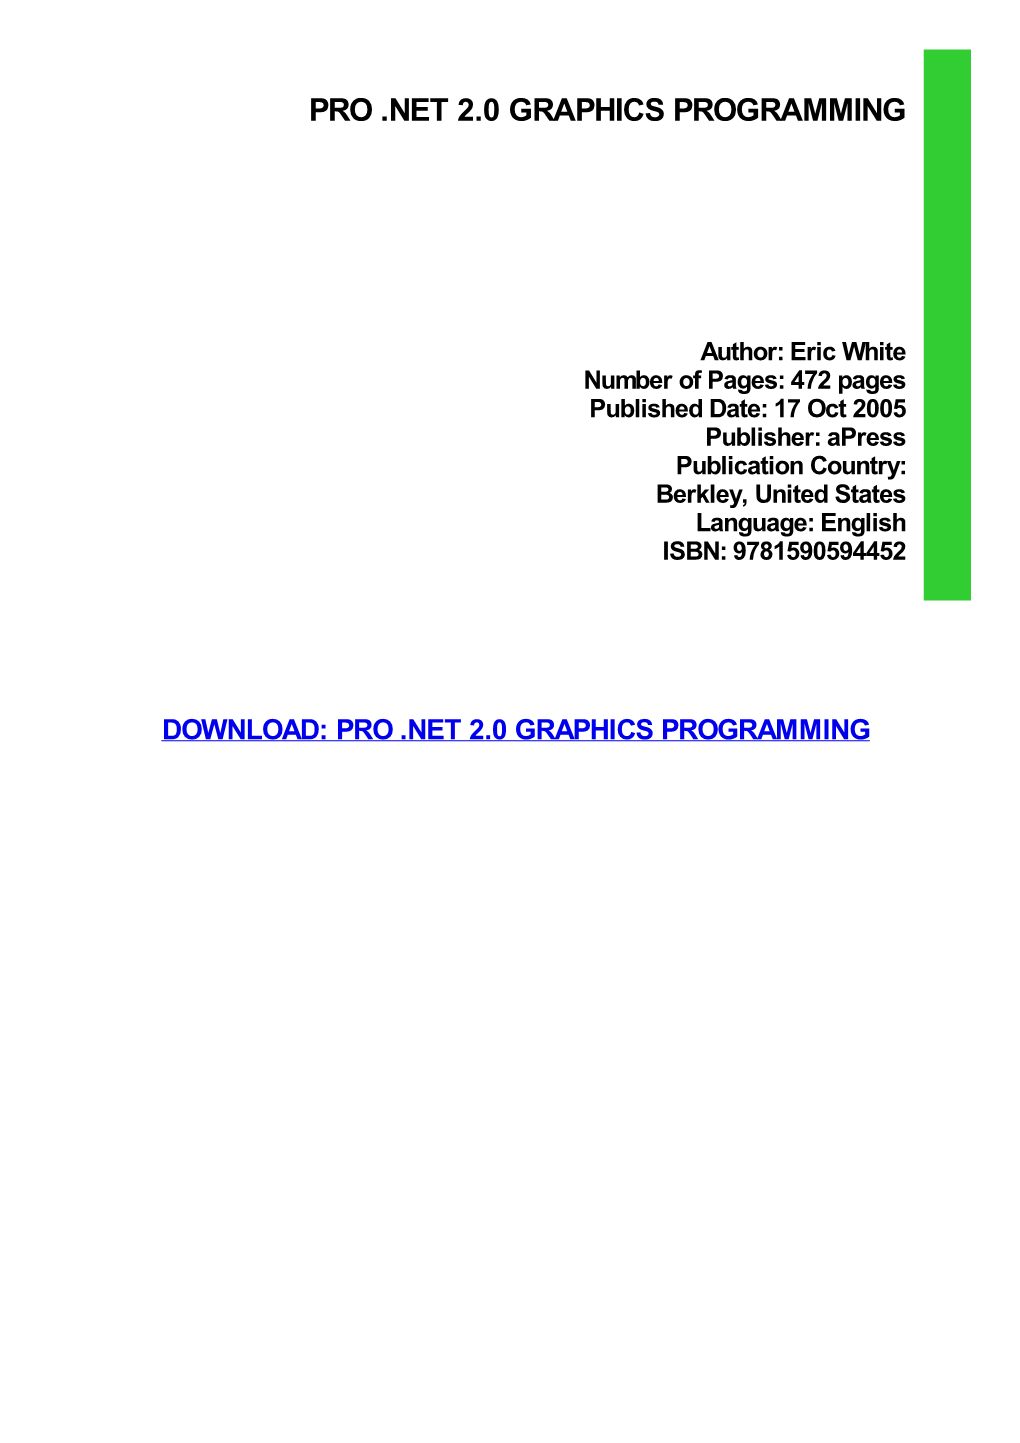 Pro .NET 2.0 Graphics Programming Pdf Free Download